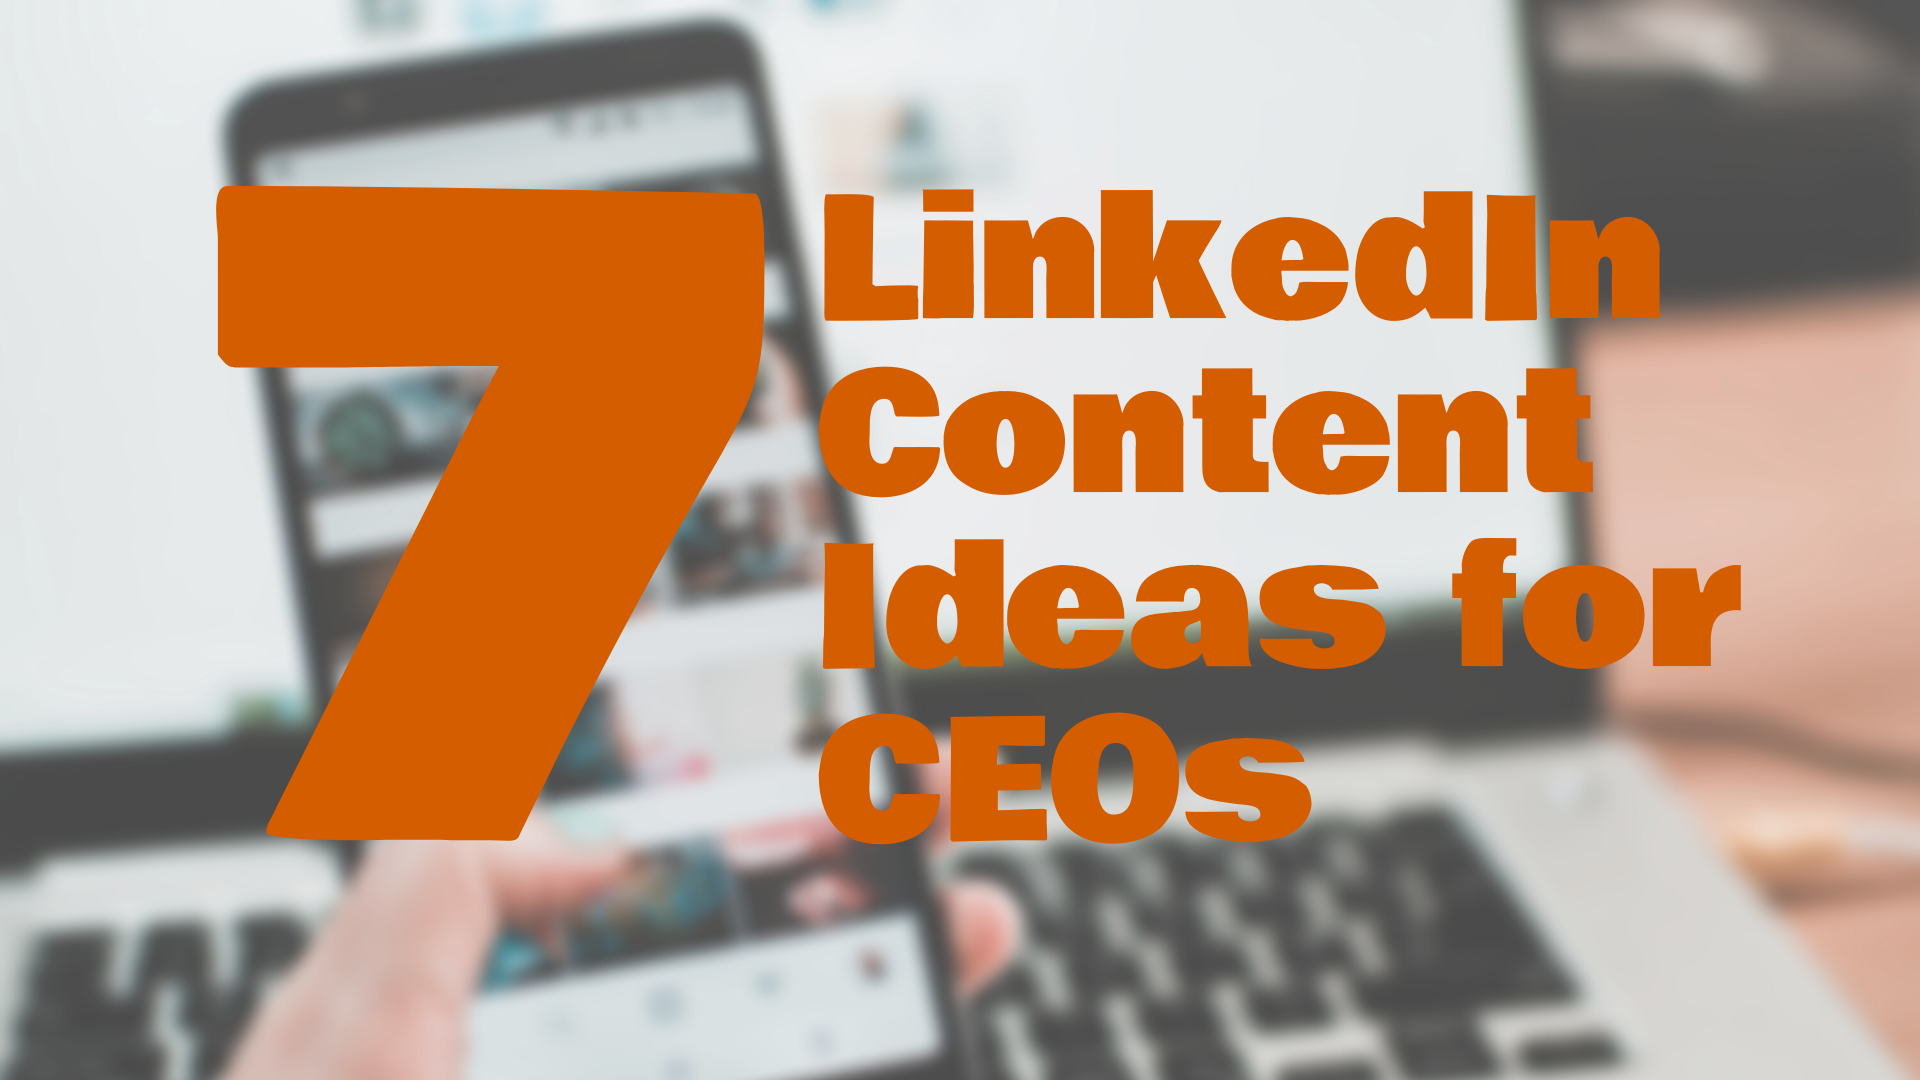 7 LinkedIn Content Ideas for CEOs